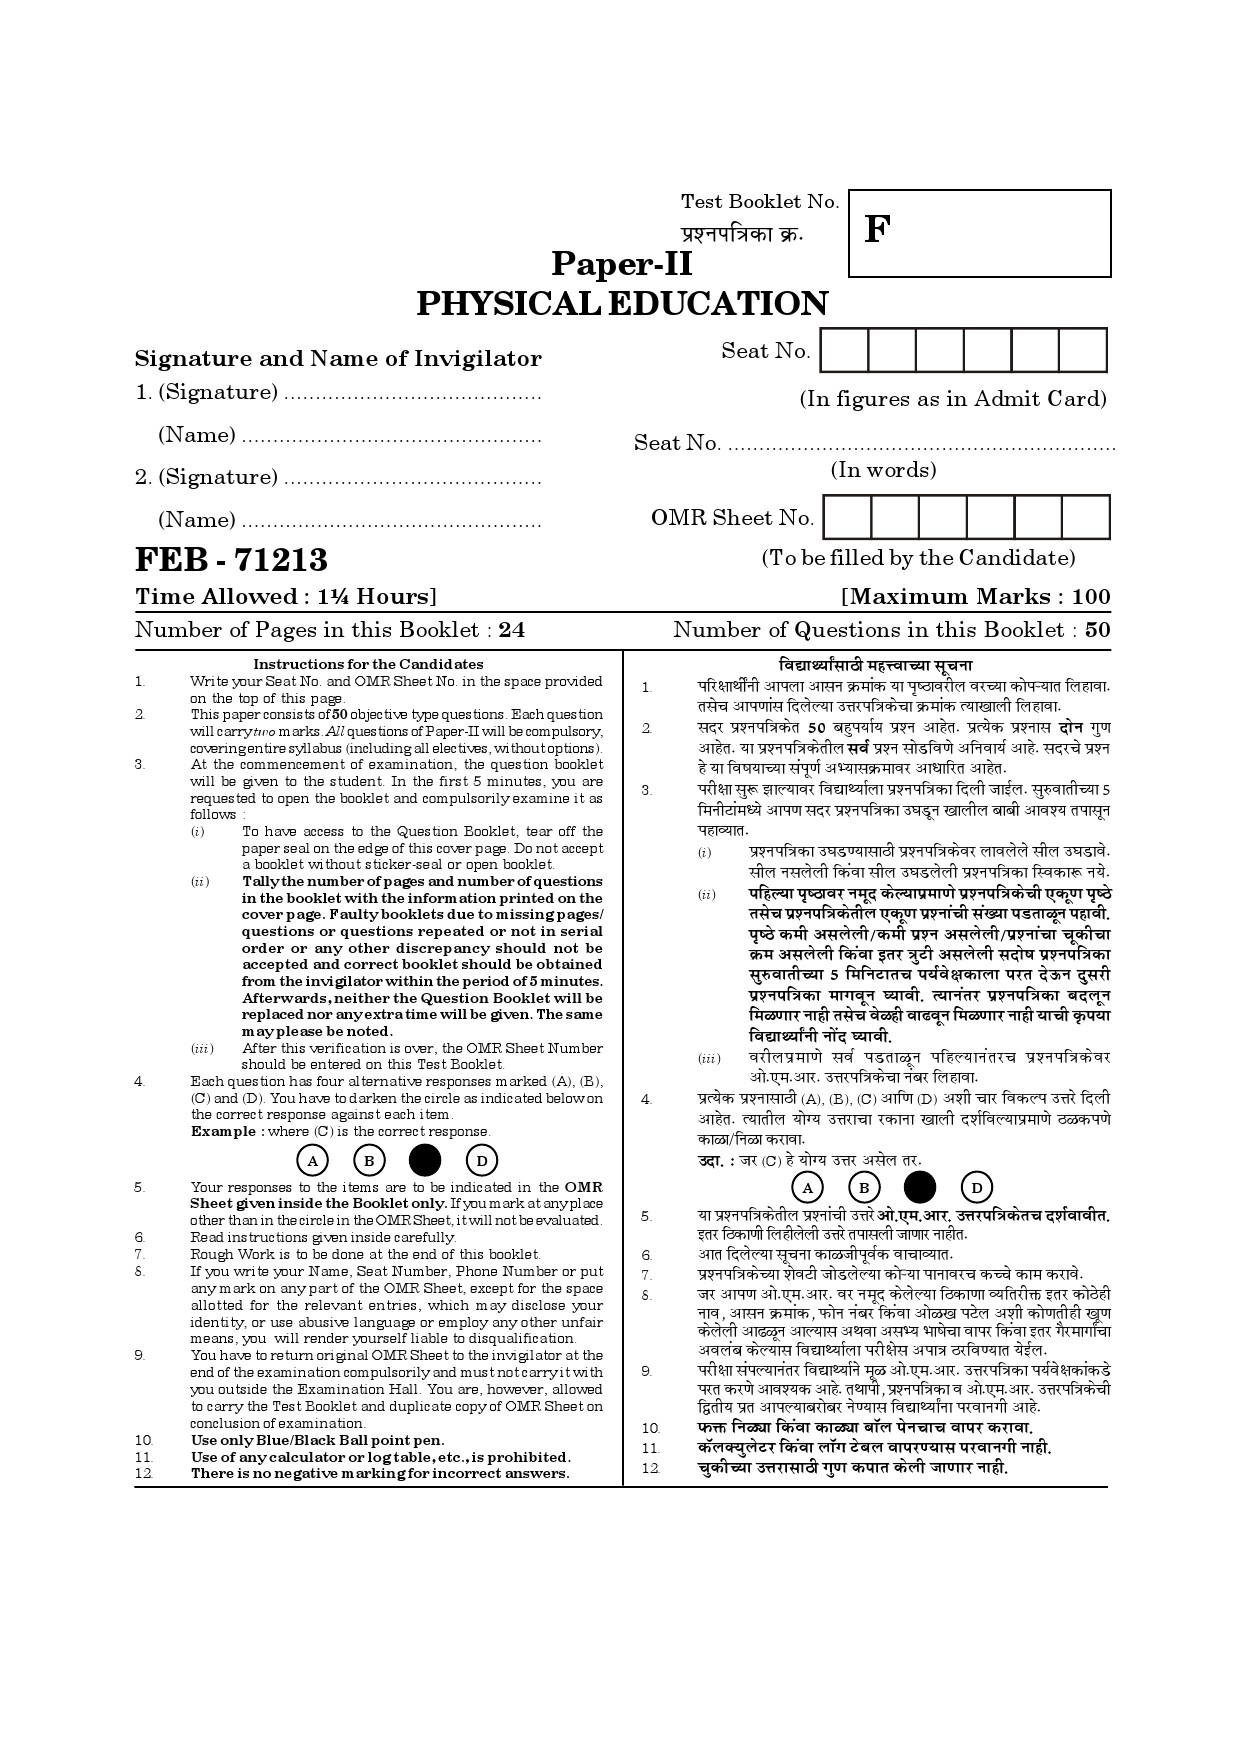 Maharashtra SET Physical Education Question Paper II February 2013 21